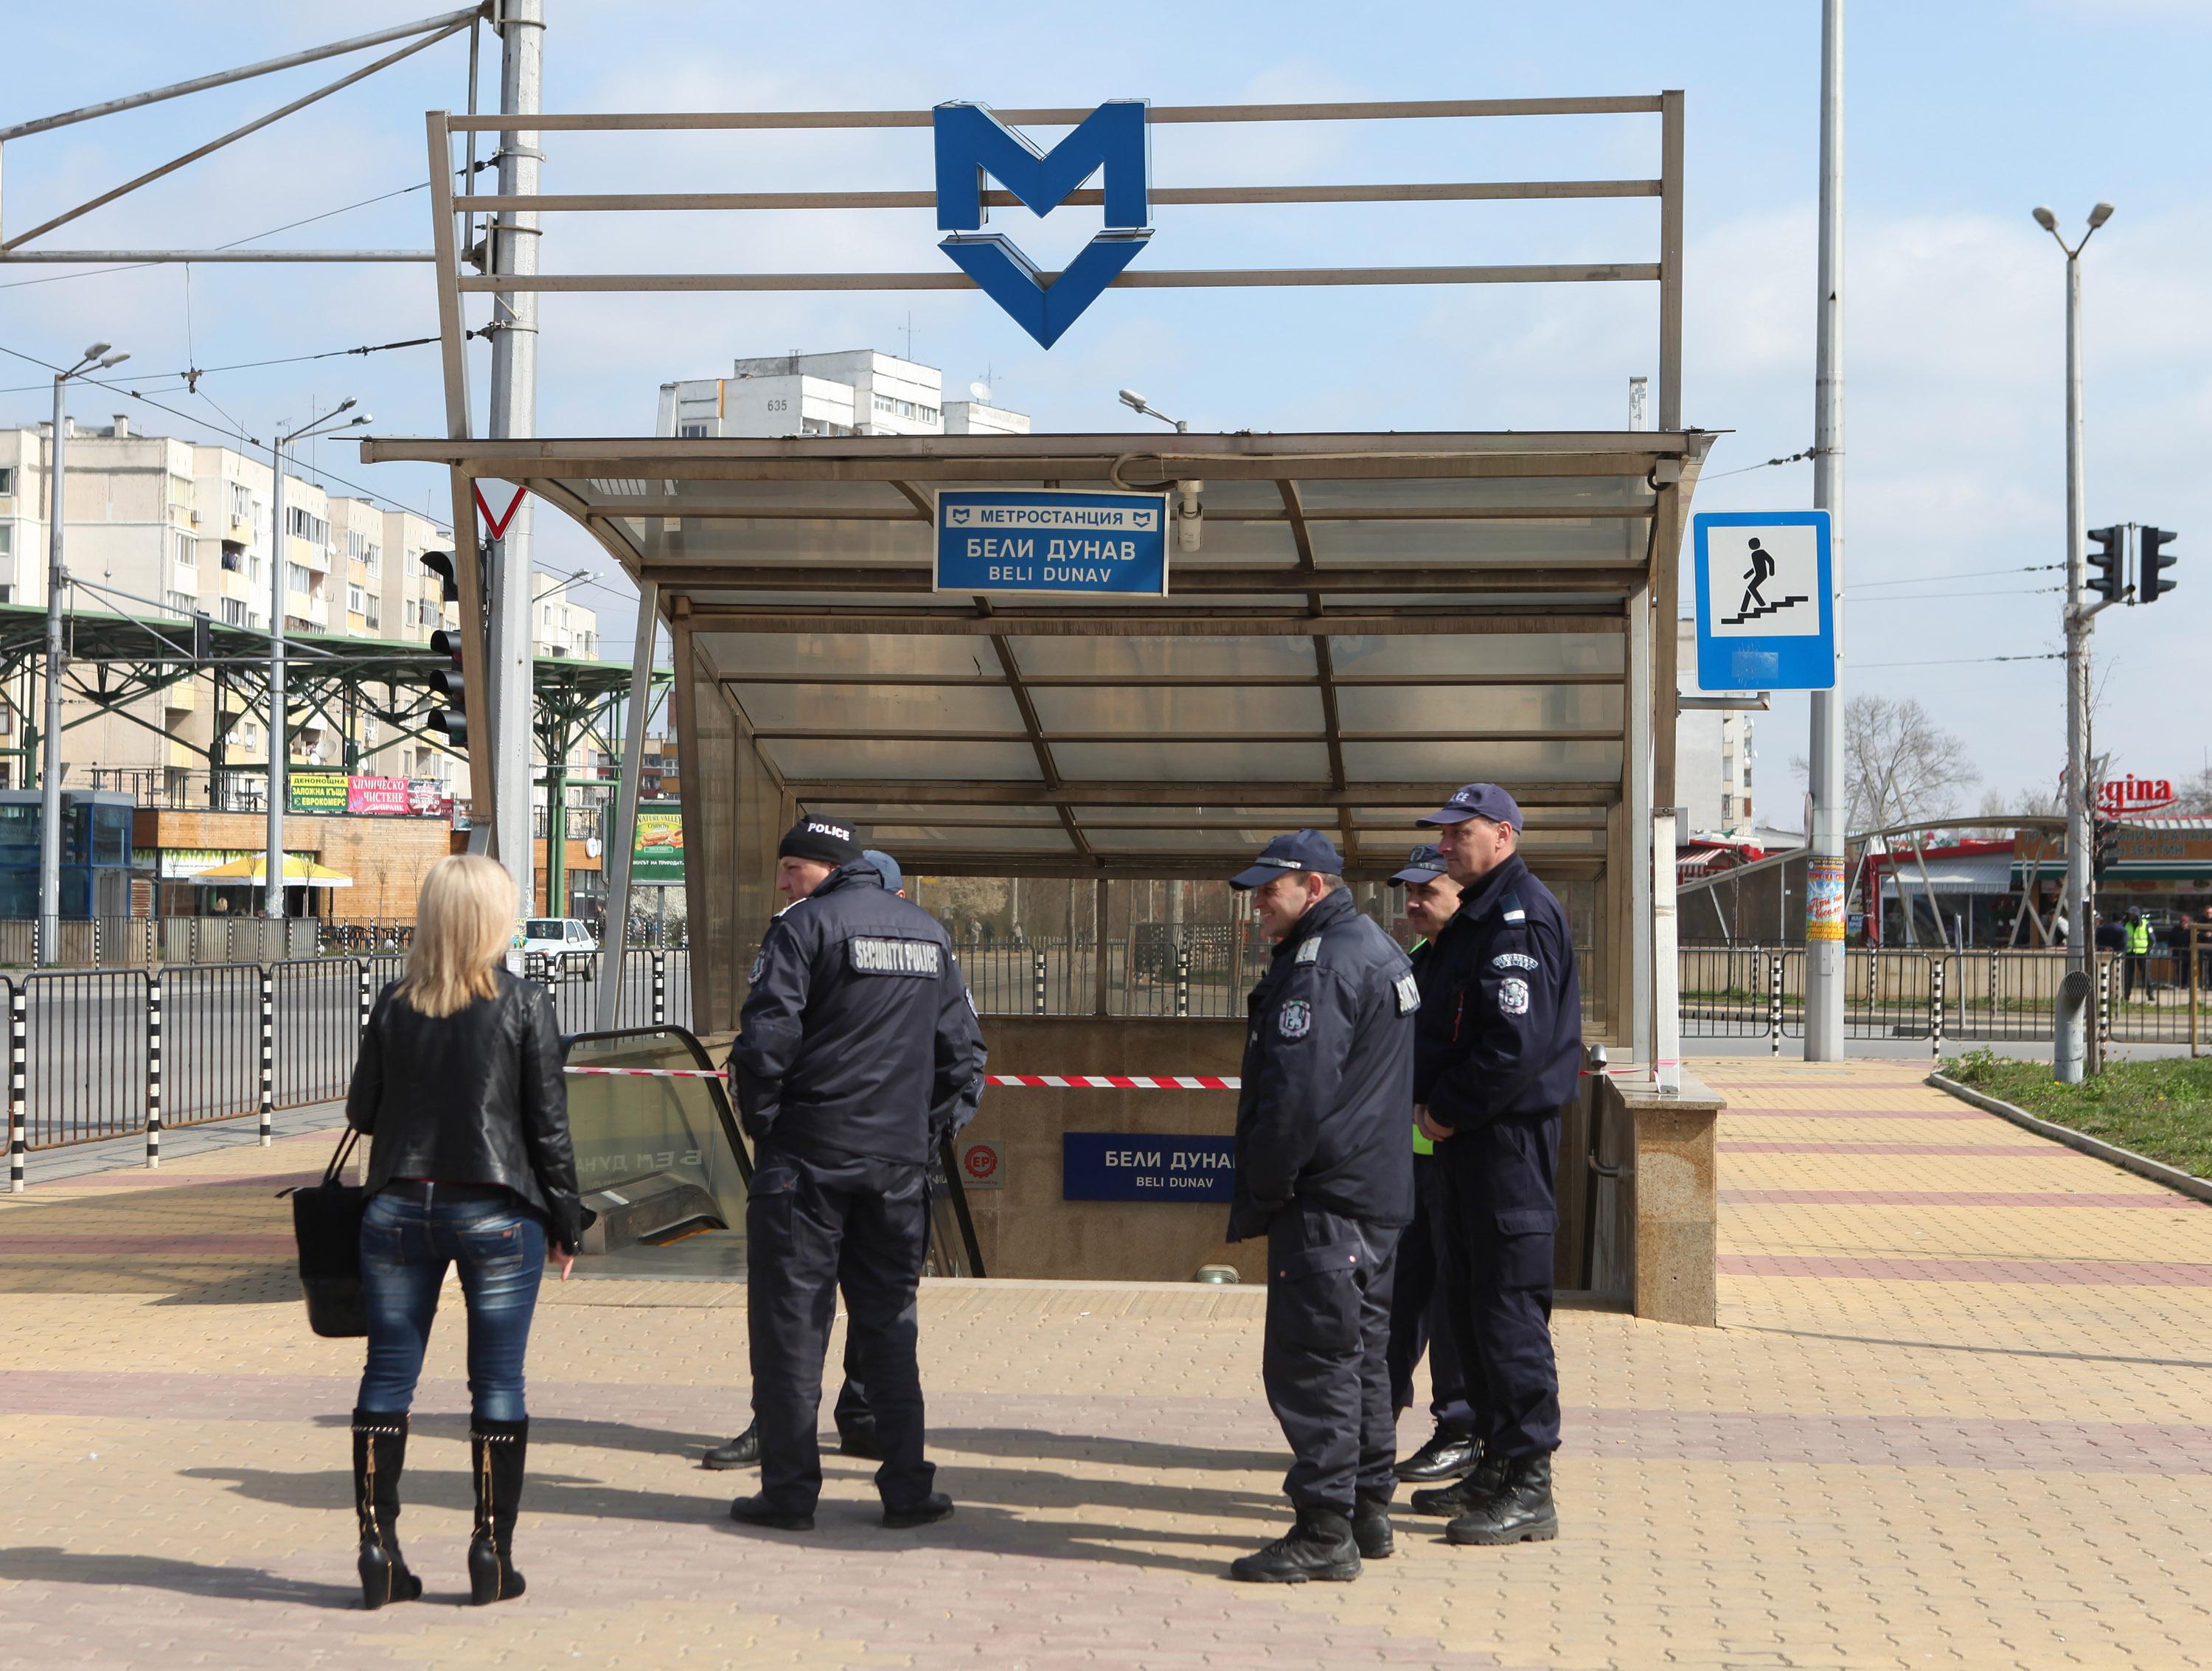 Сигнал за бомба затвори софийското метро при метростанция ”Бели Дунав”